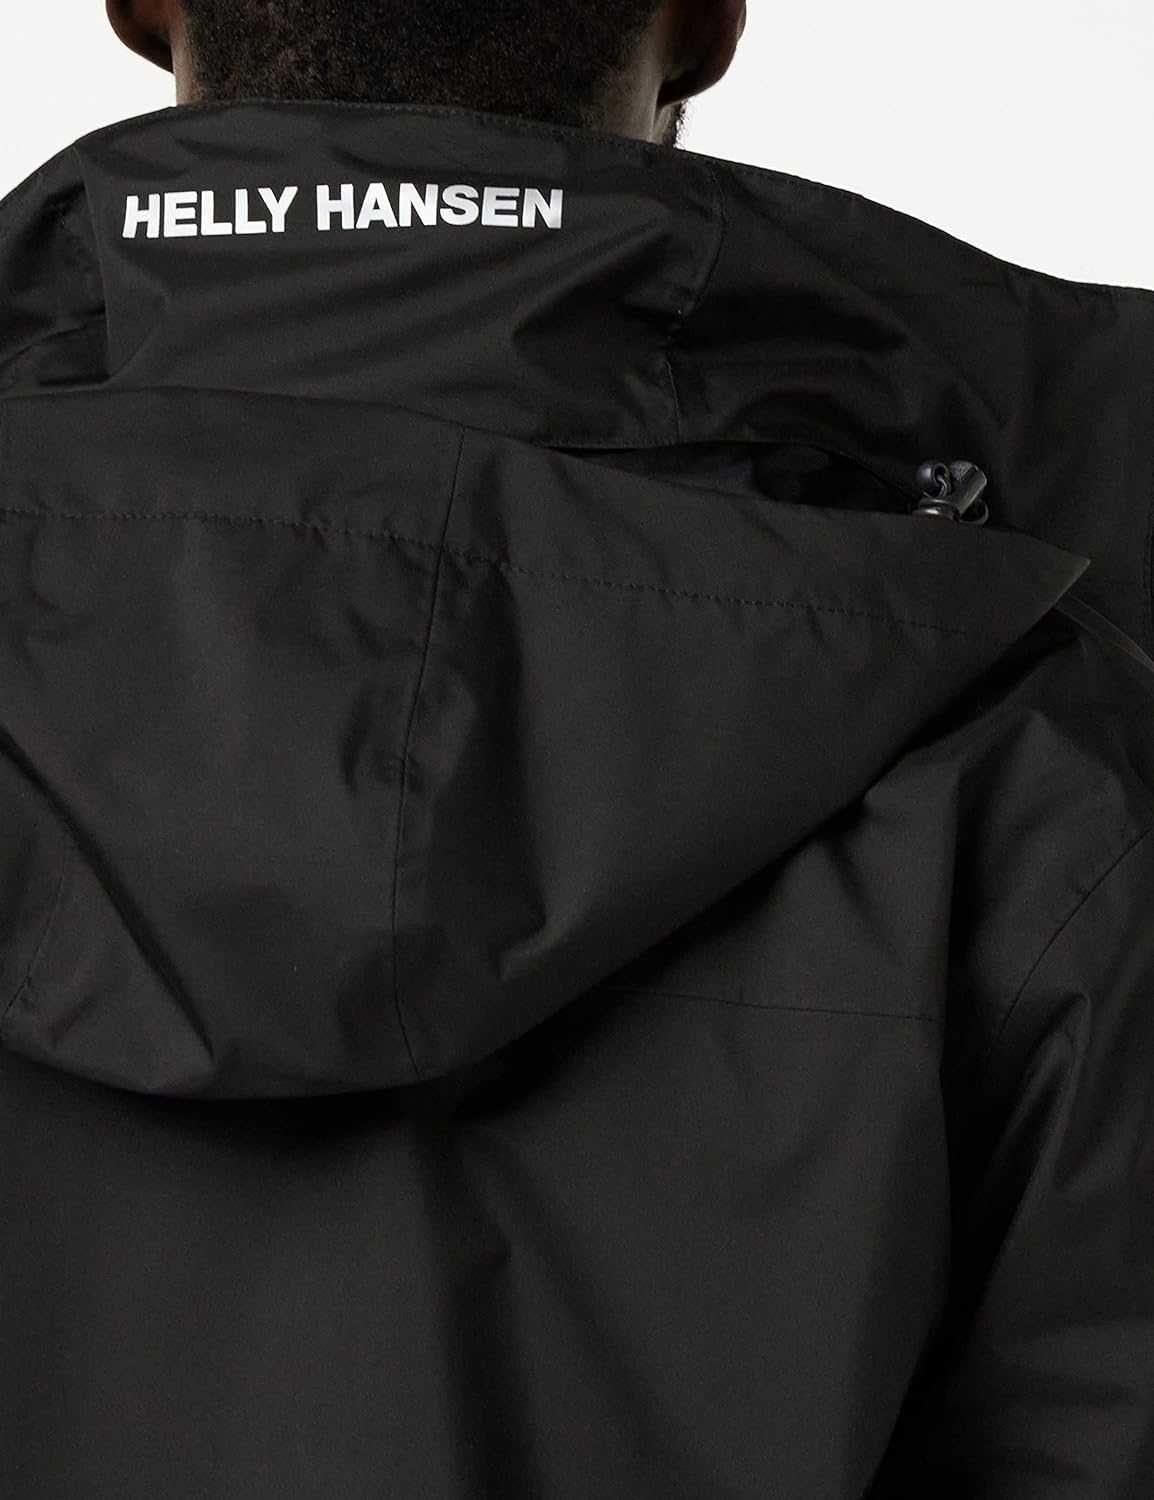 Куртка Helly Hansen Chillblocker Hooded Cis 2 в 1 розмір M XL (52-54)